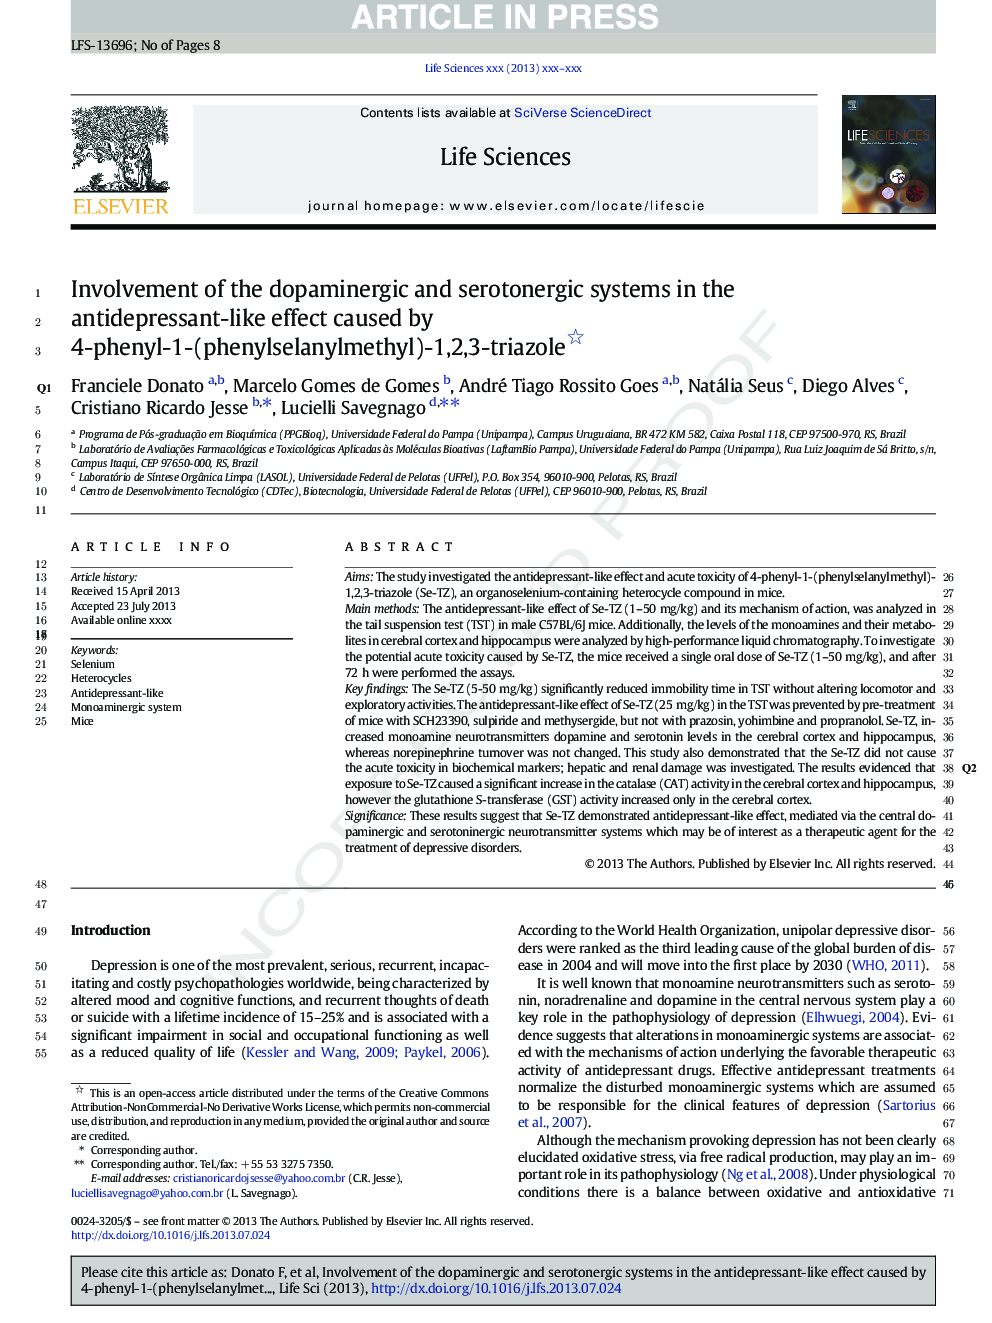 Involvement of the dopaminergic and serotonergic systems in the antidepressant-like effect caused by 4-phenyl-1-(phenylselanylmethyl)-1,2,3-triazole